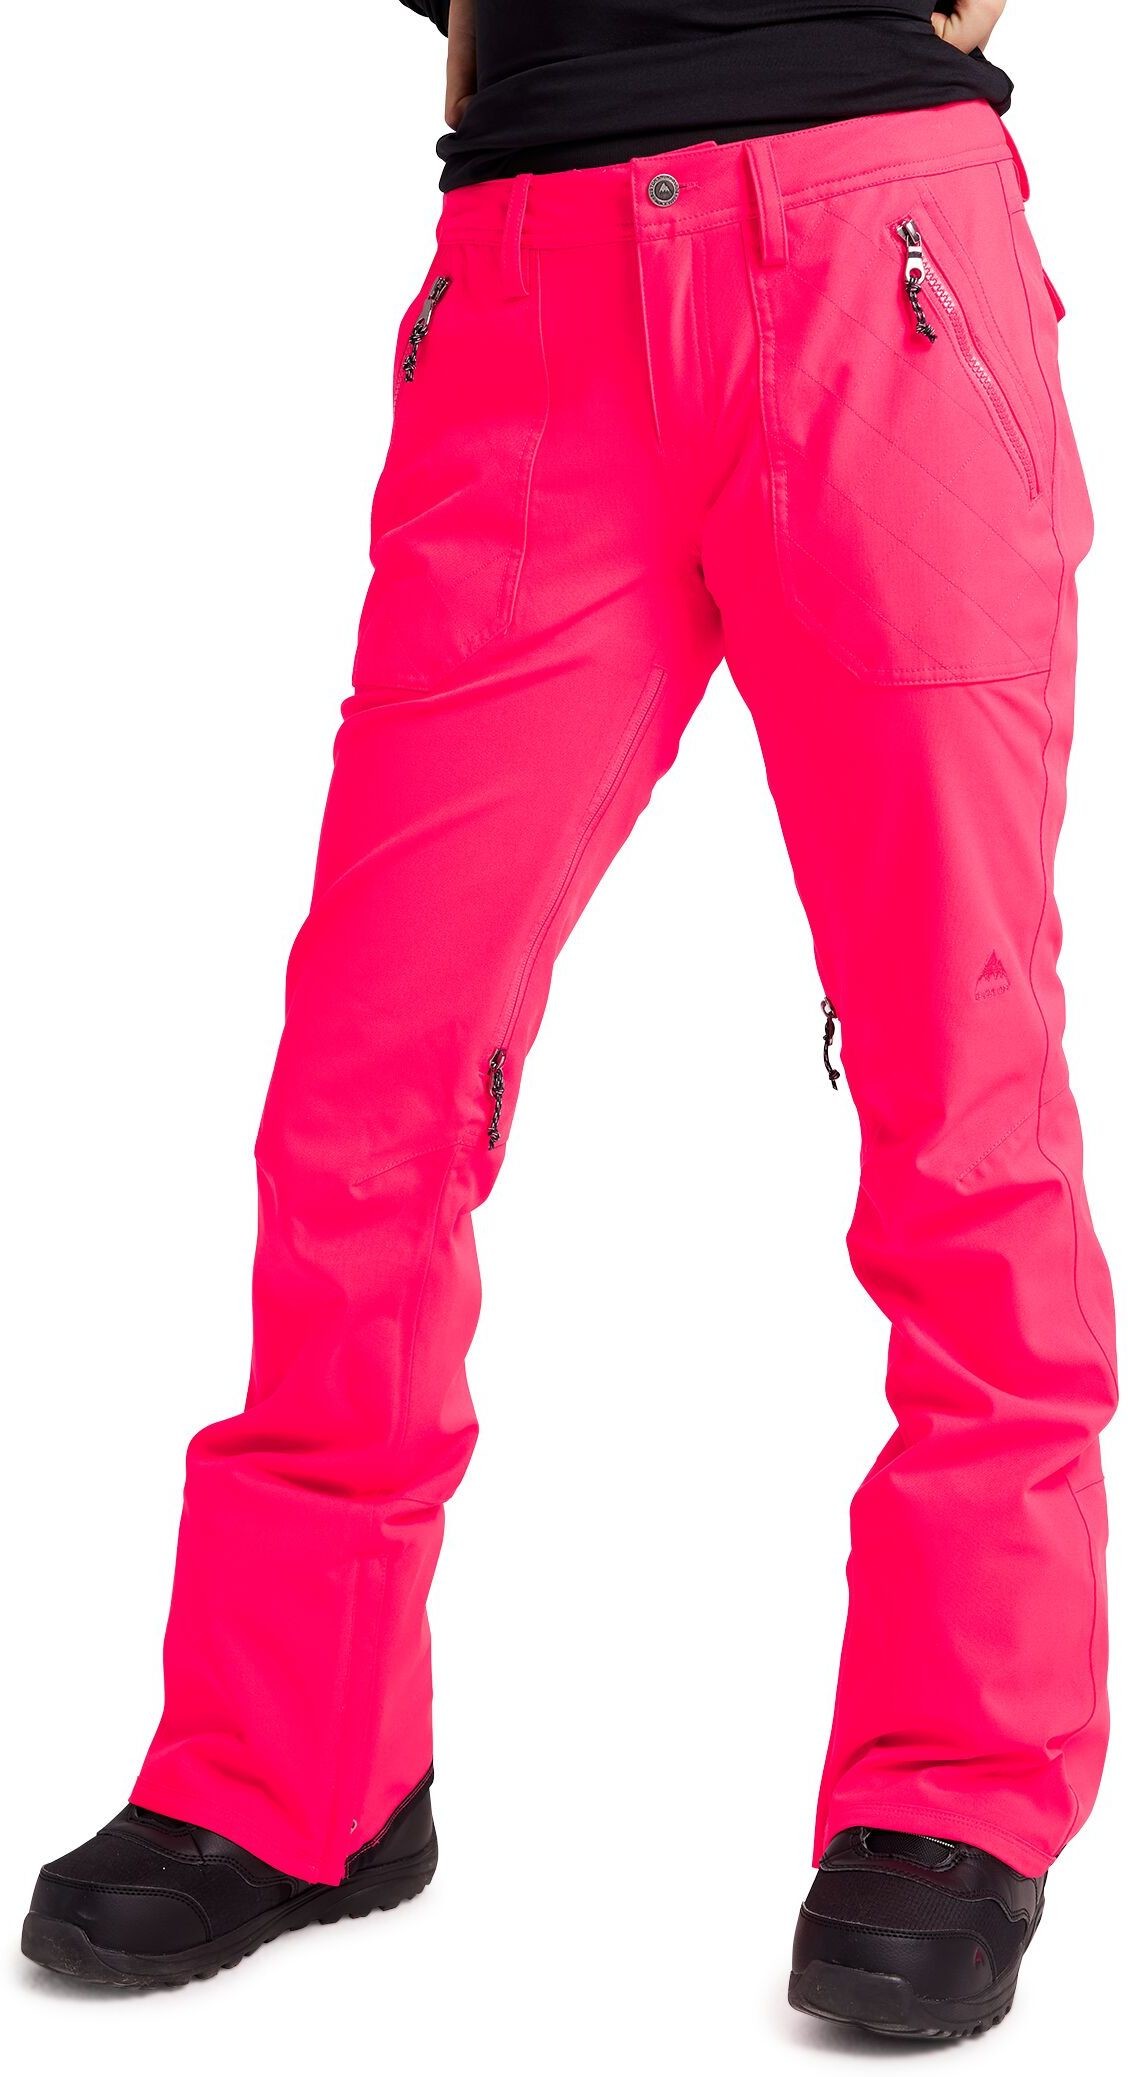 Burton zimowe spodnie damskie VIDA PT Potent Pink